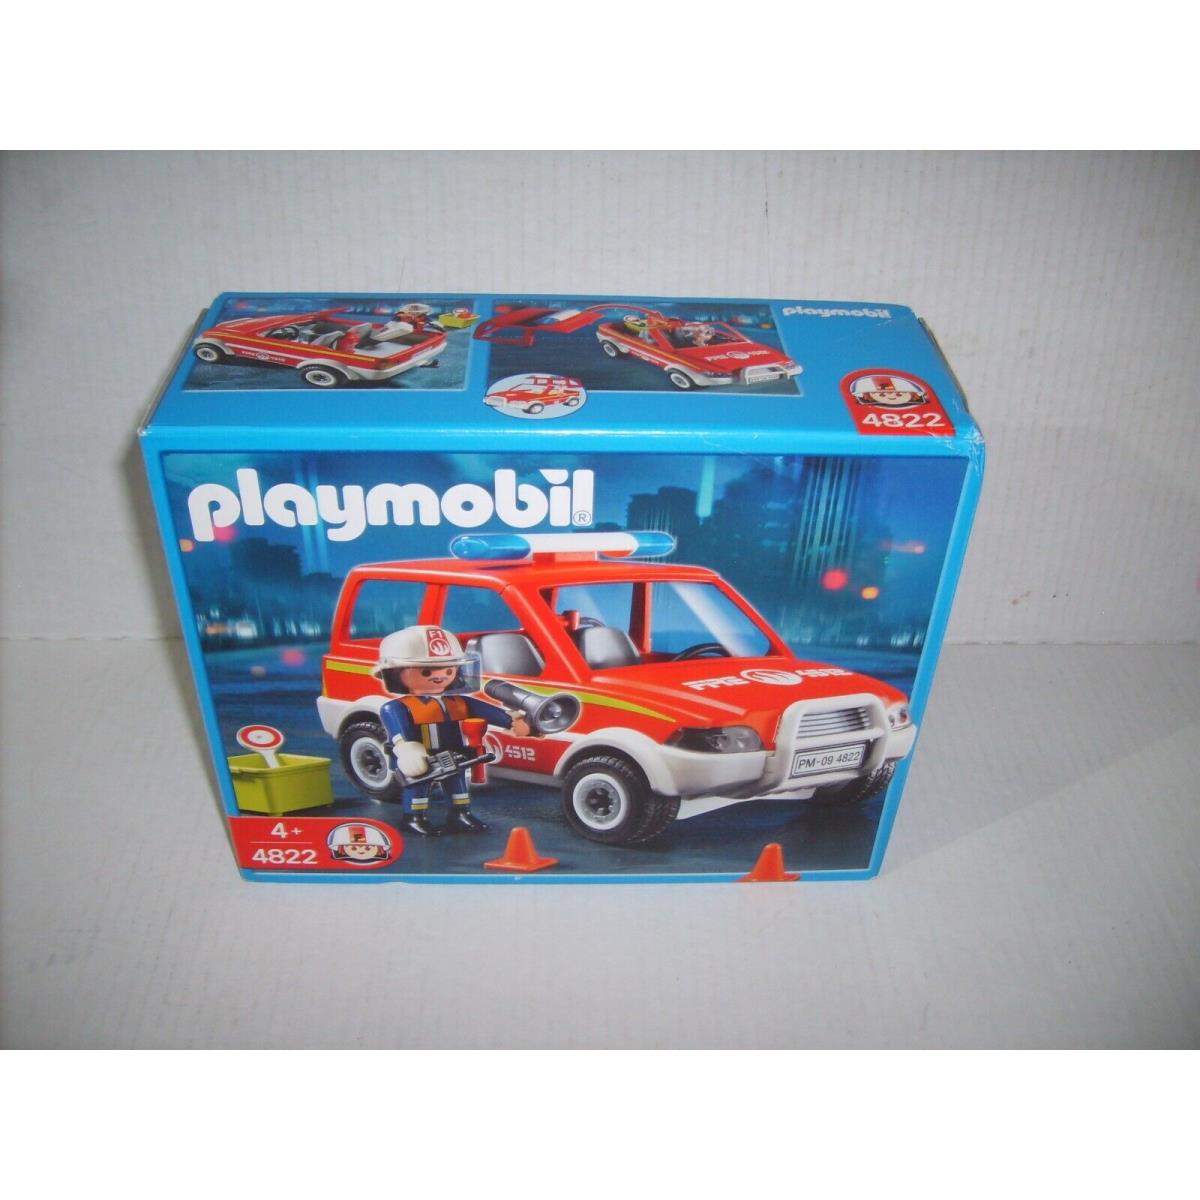 Playmobil Toy 45 Piece Set Fire Rescue Worker Truck Model 4822